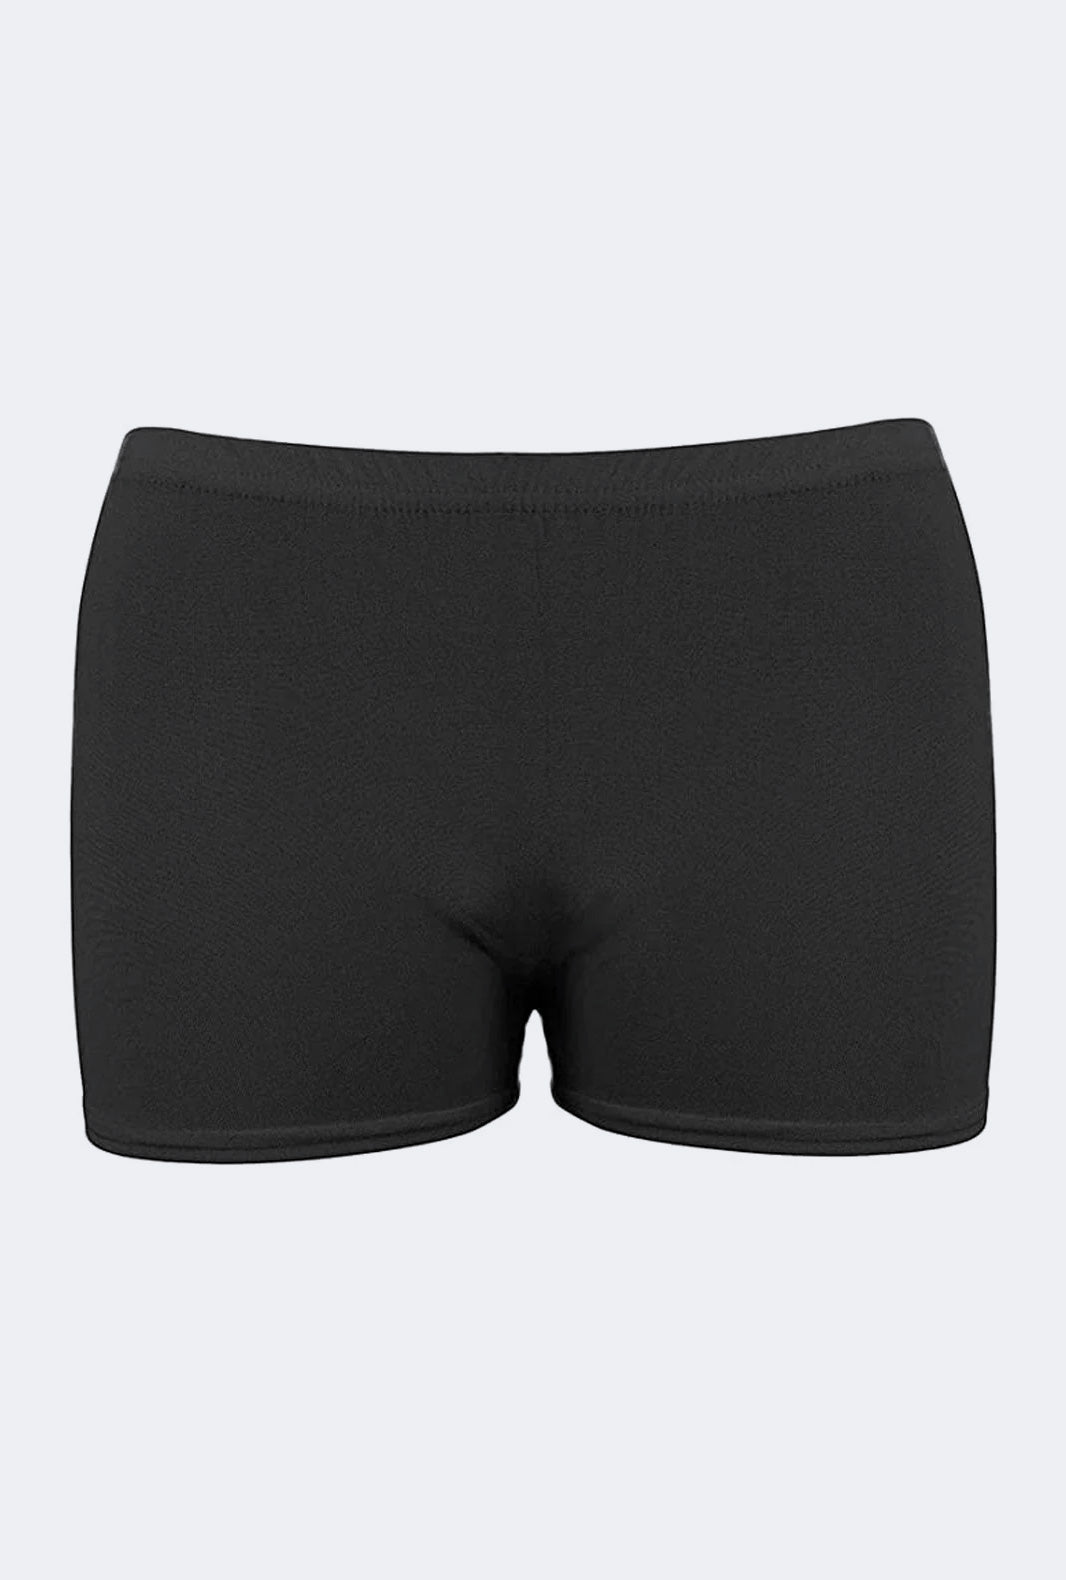 Girls Neon Microfiber Hot Pant Summer Shorts